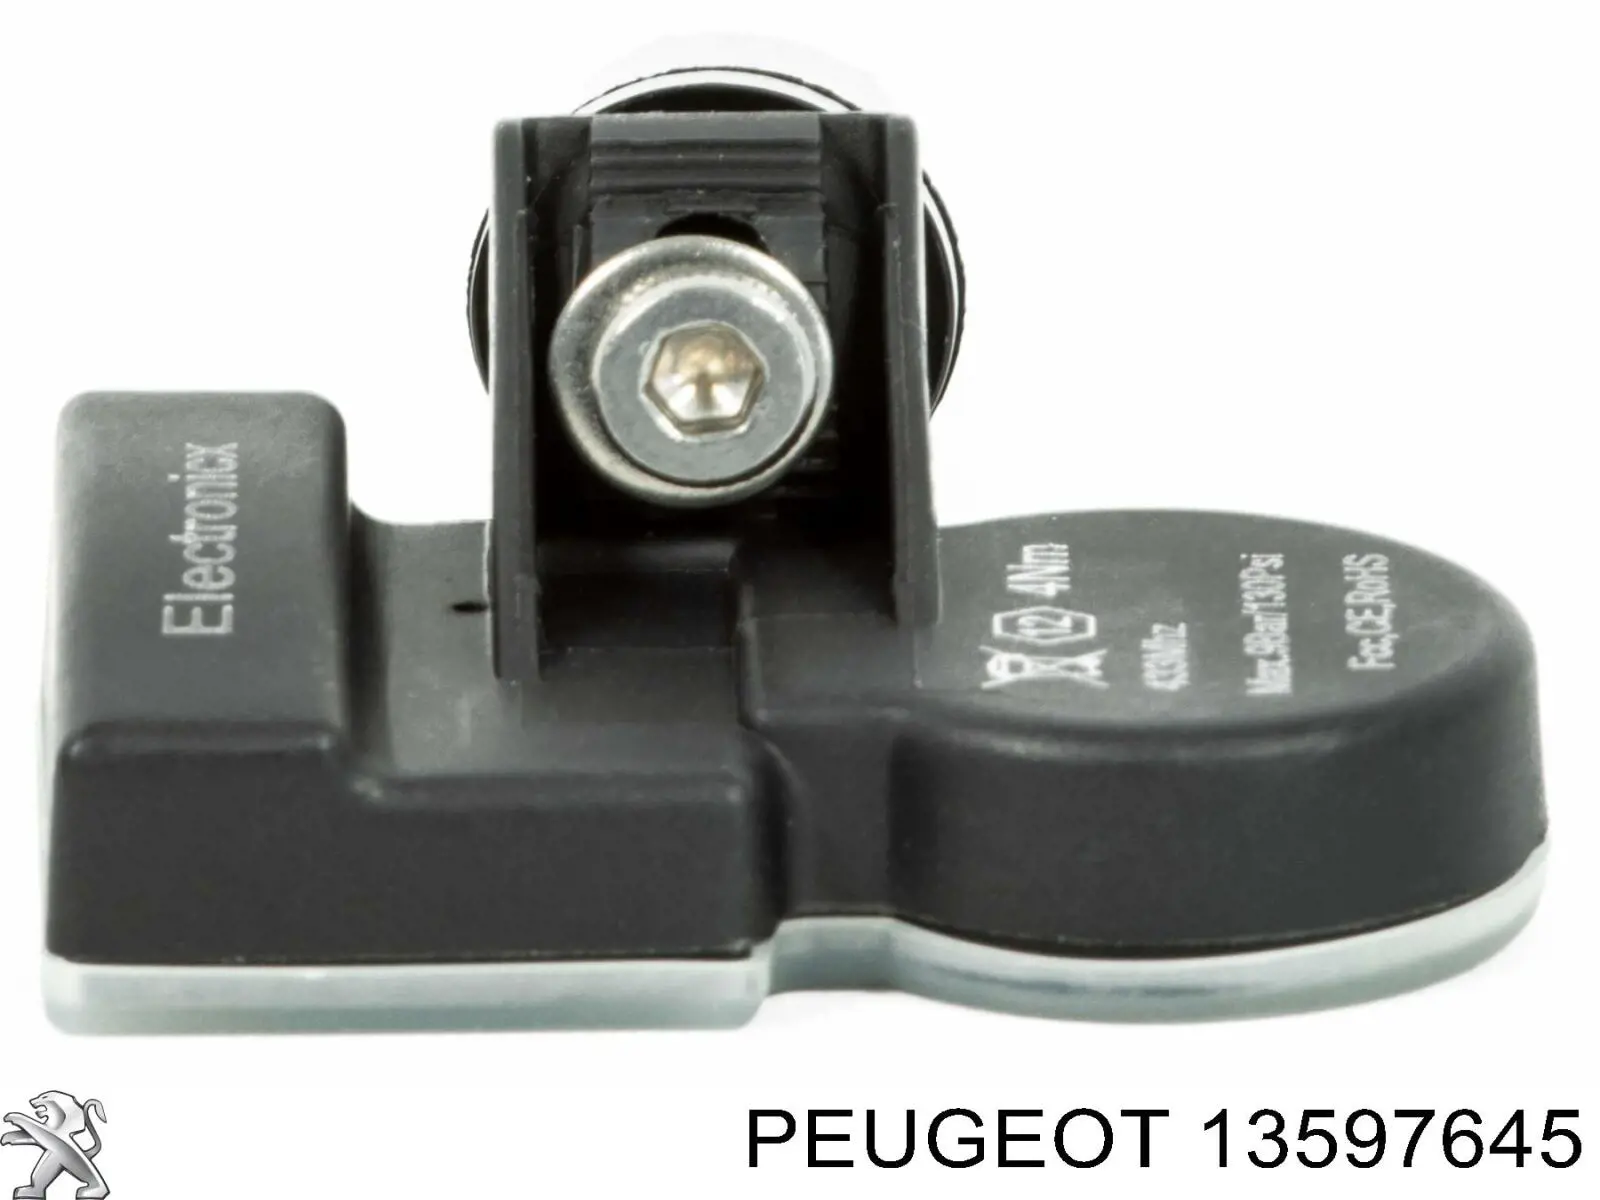 13597645 Peugeot/Citroen sensor de presion de neumaticos